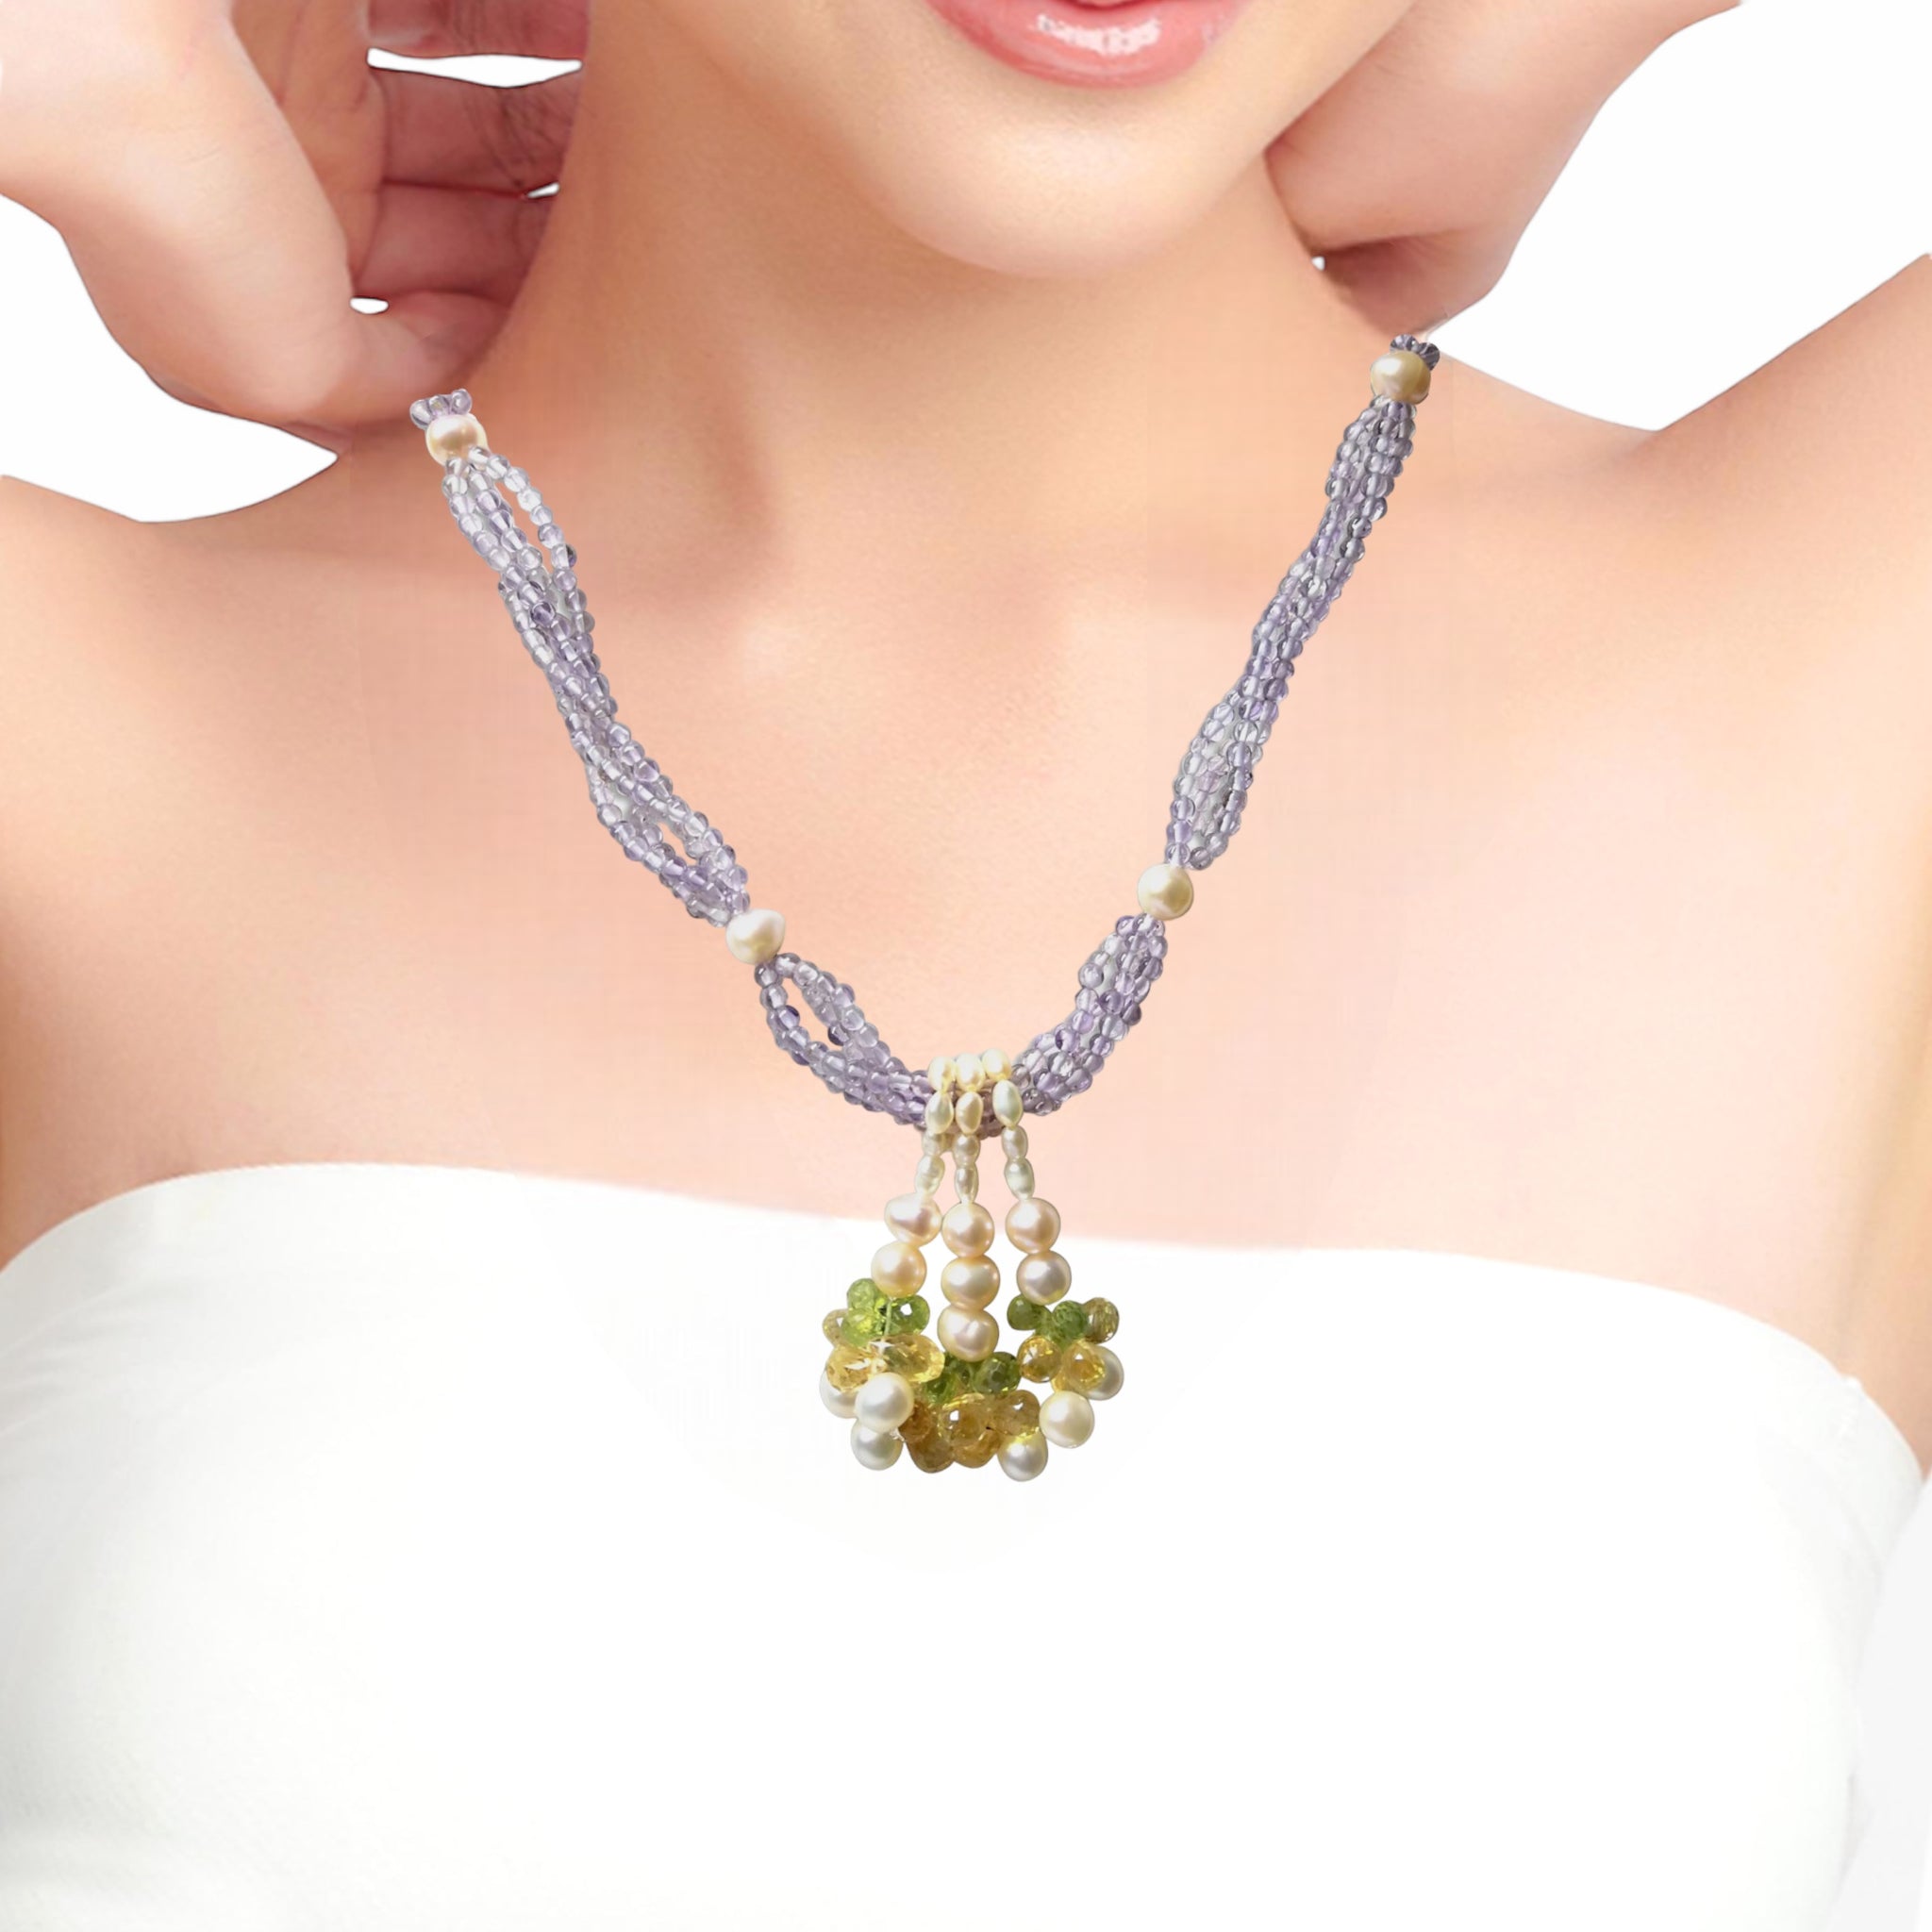 Natural Handmade Necklace 16"-18" Amethyst, Peridot, Citrine, Pearls Gemstone Beads Jewellery